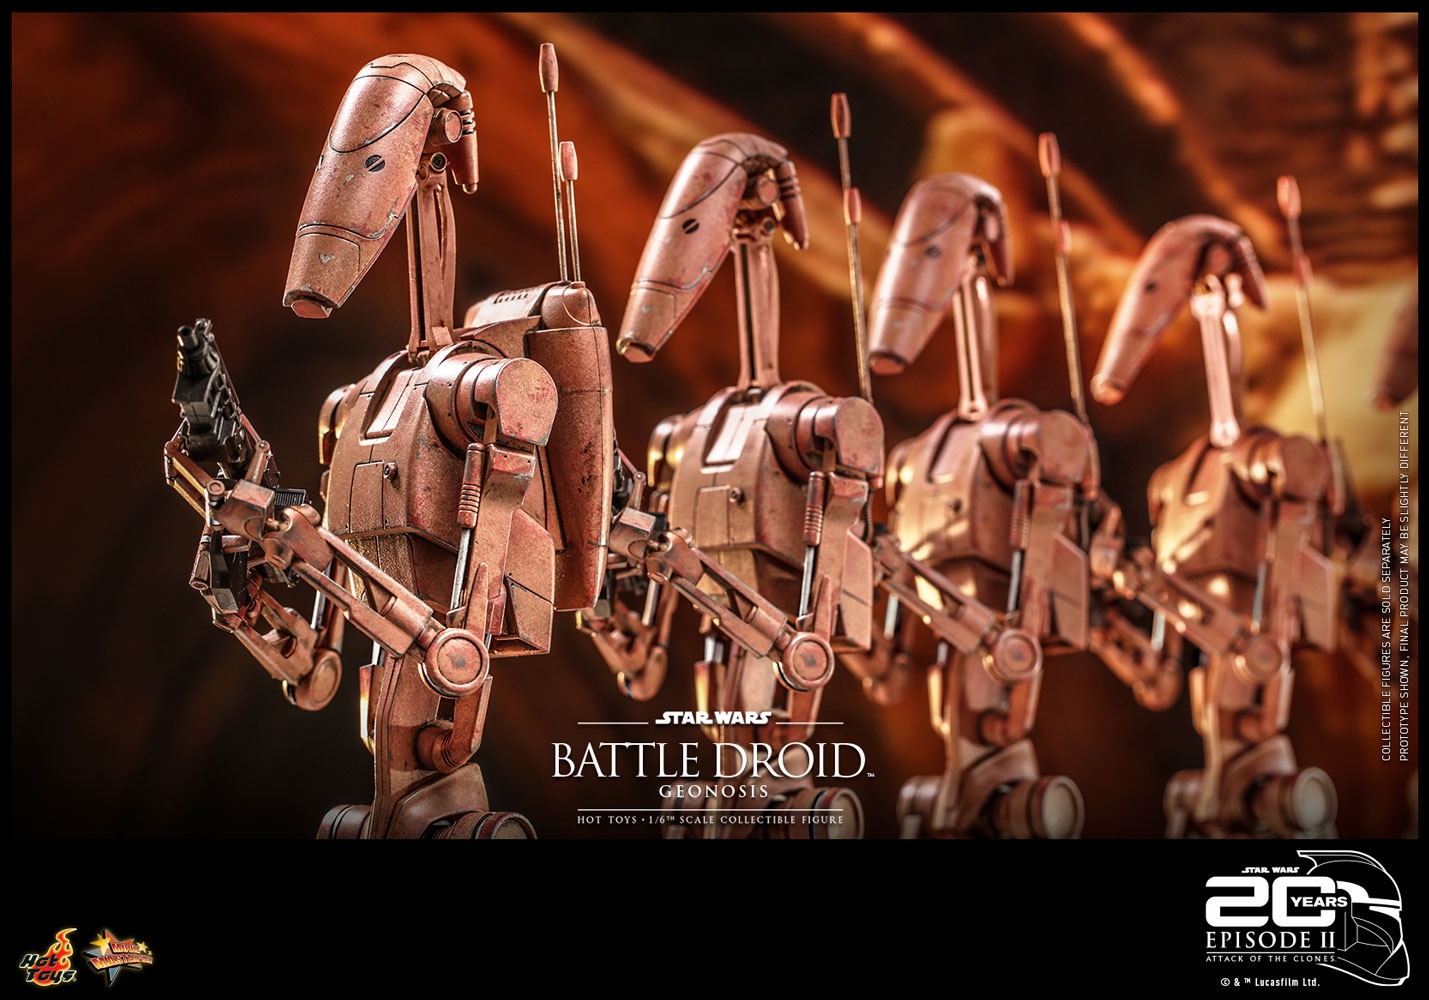 battle-droid-geonosis_star-wars_gallery_62716813a41a4.jpg